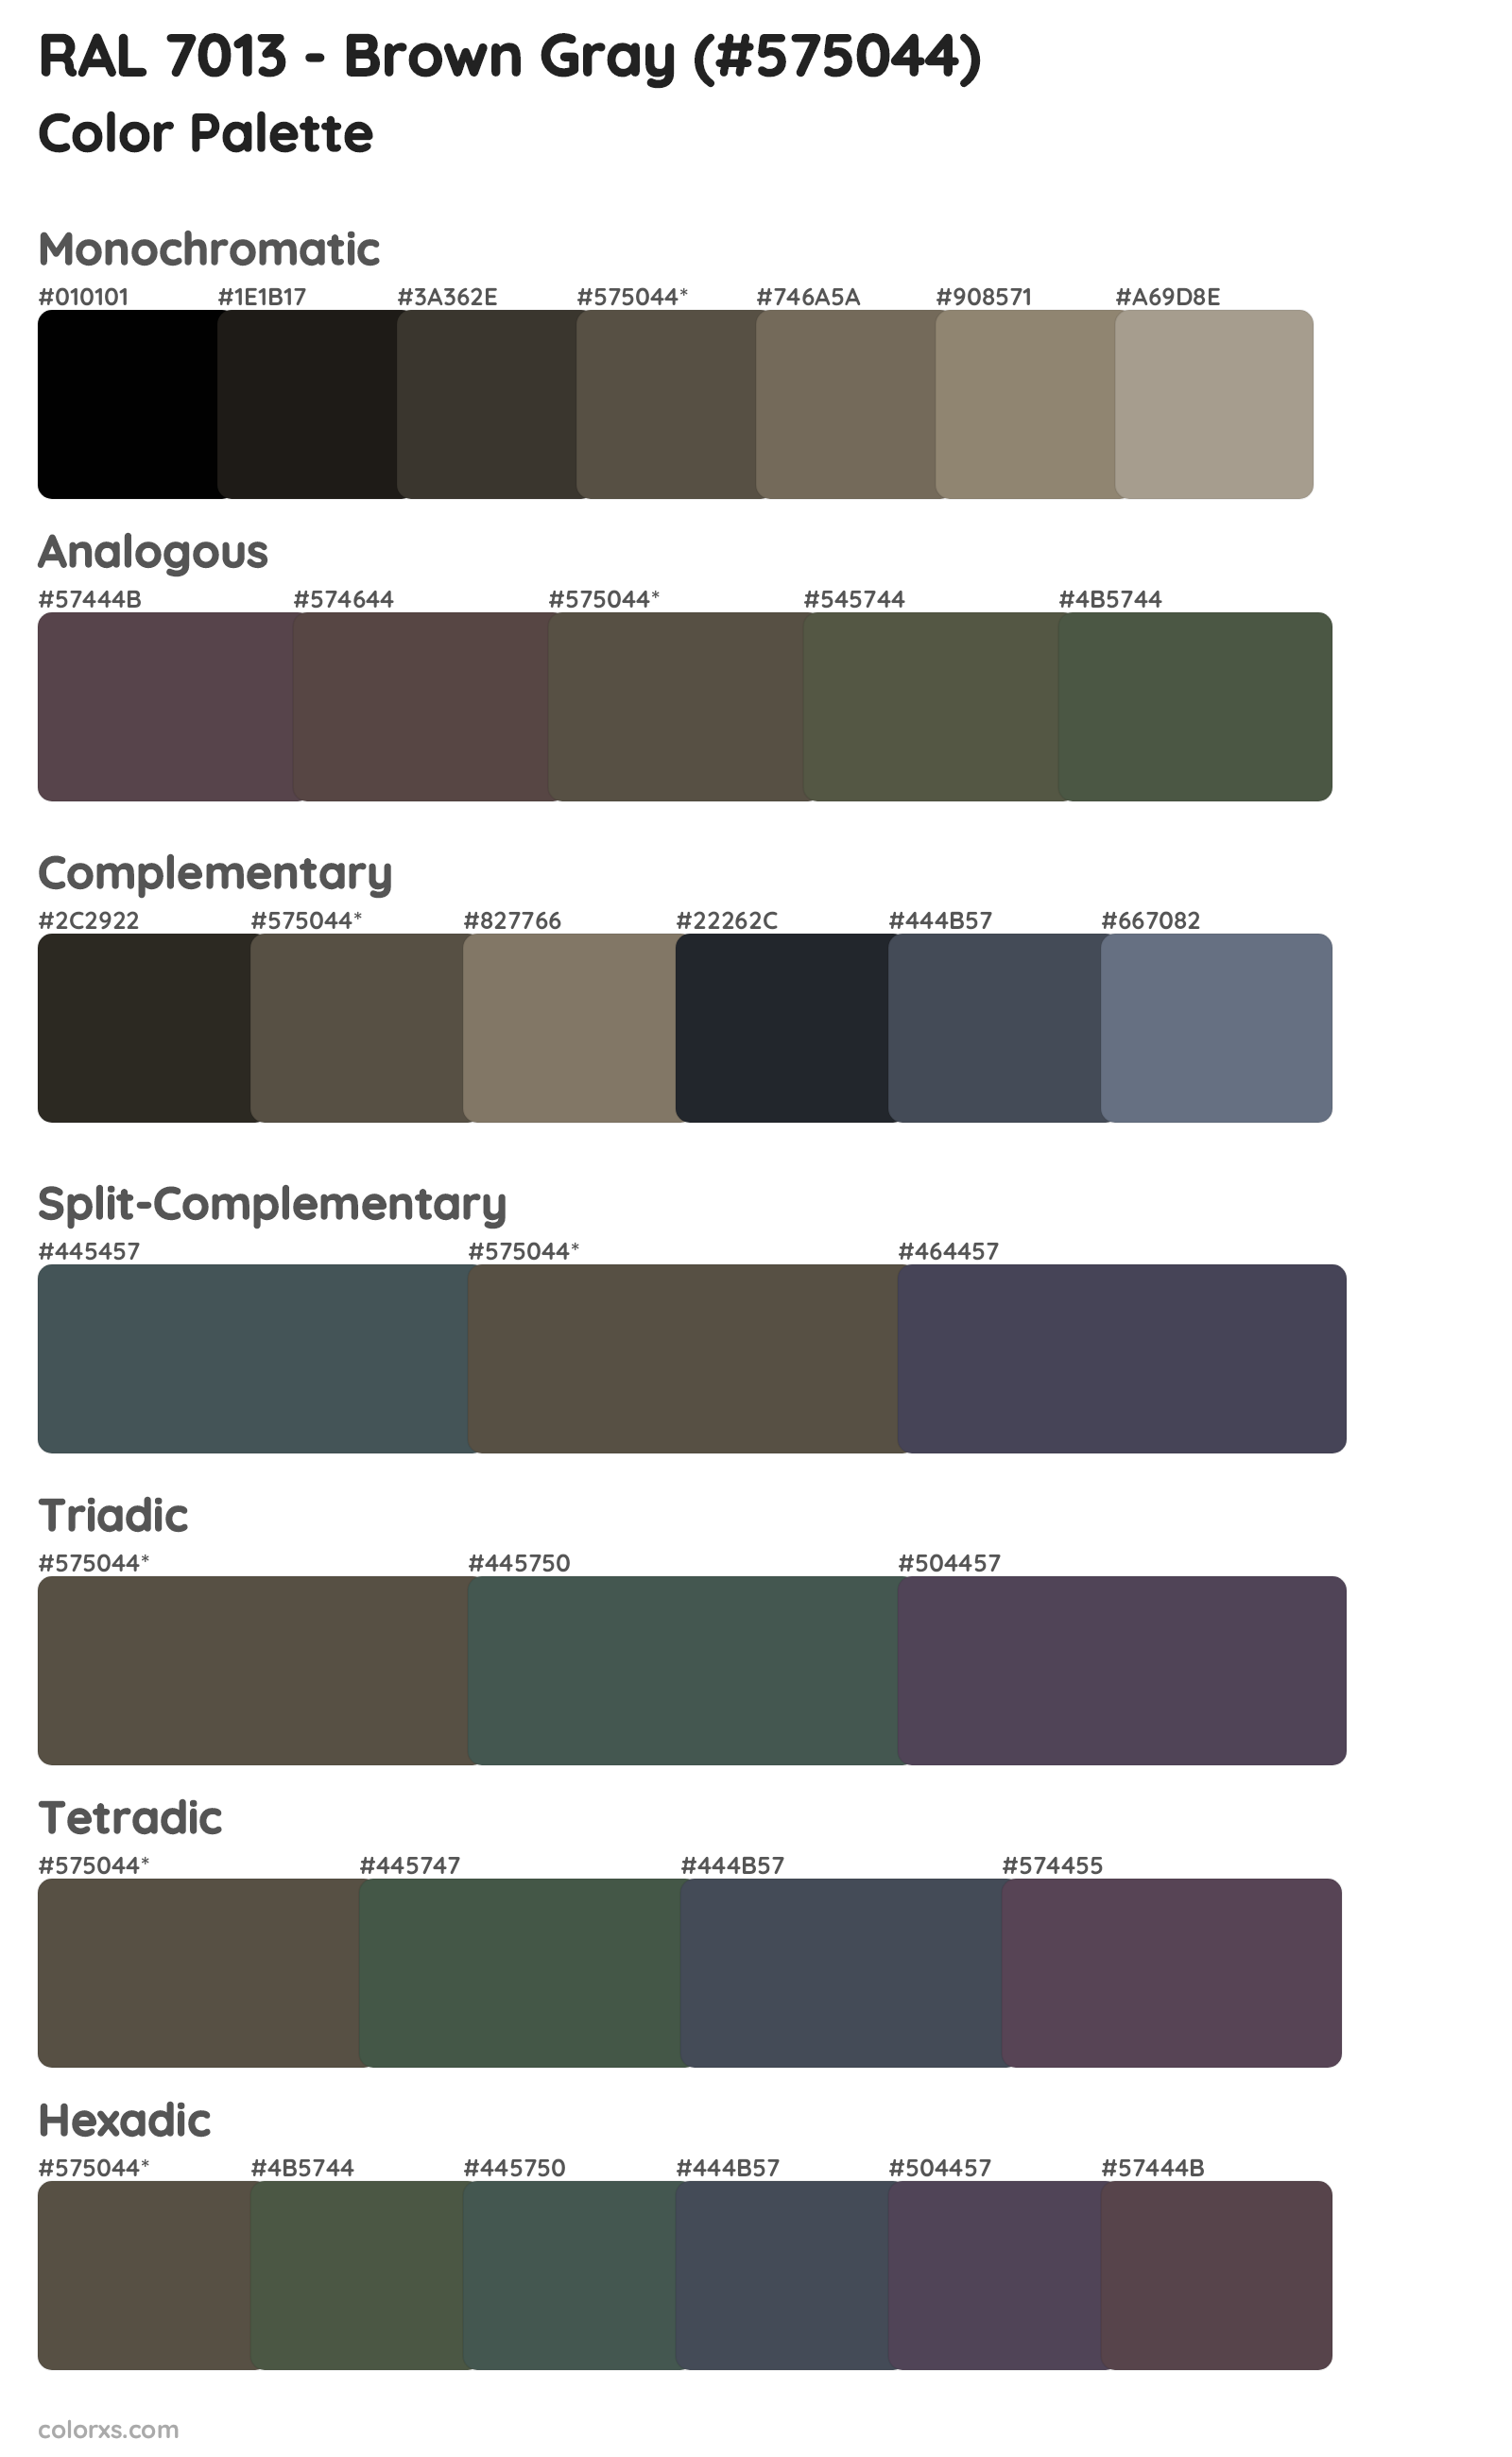 RAL 7013 - Brown Gray Color Scheme Palettes